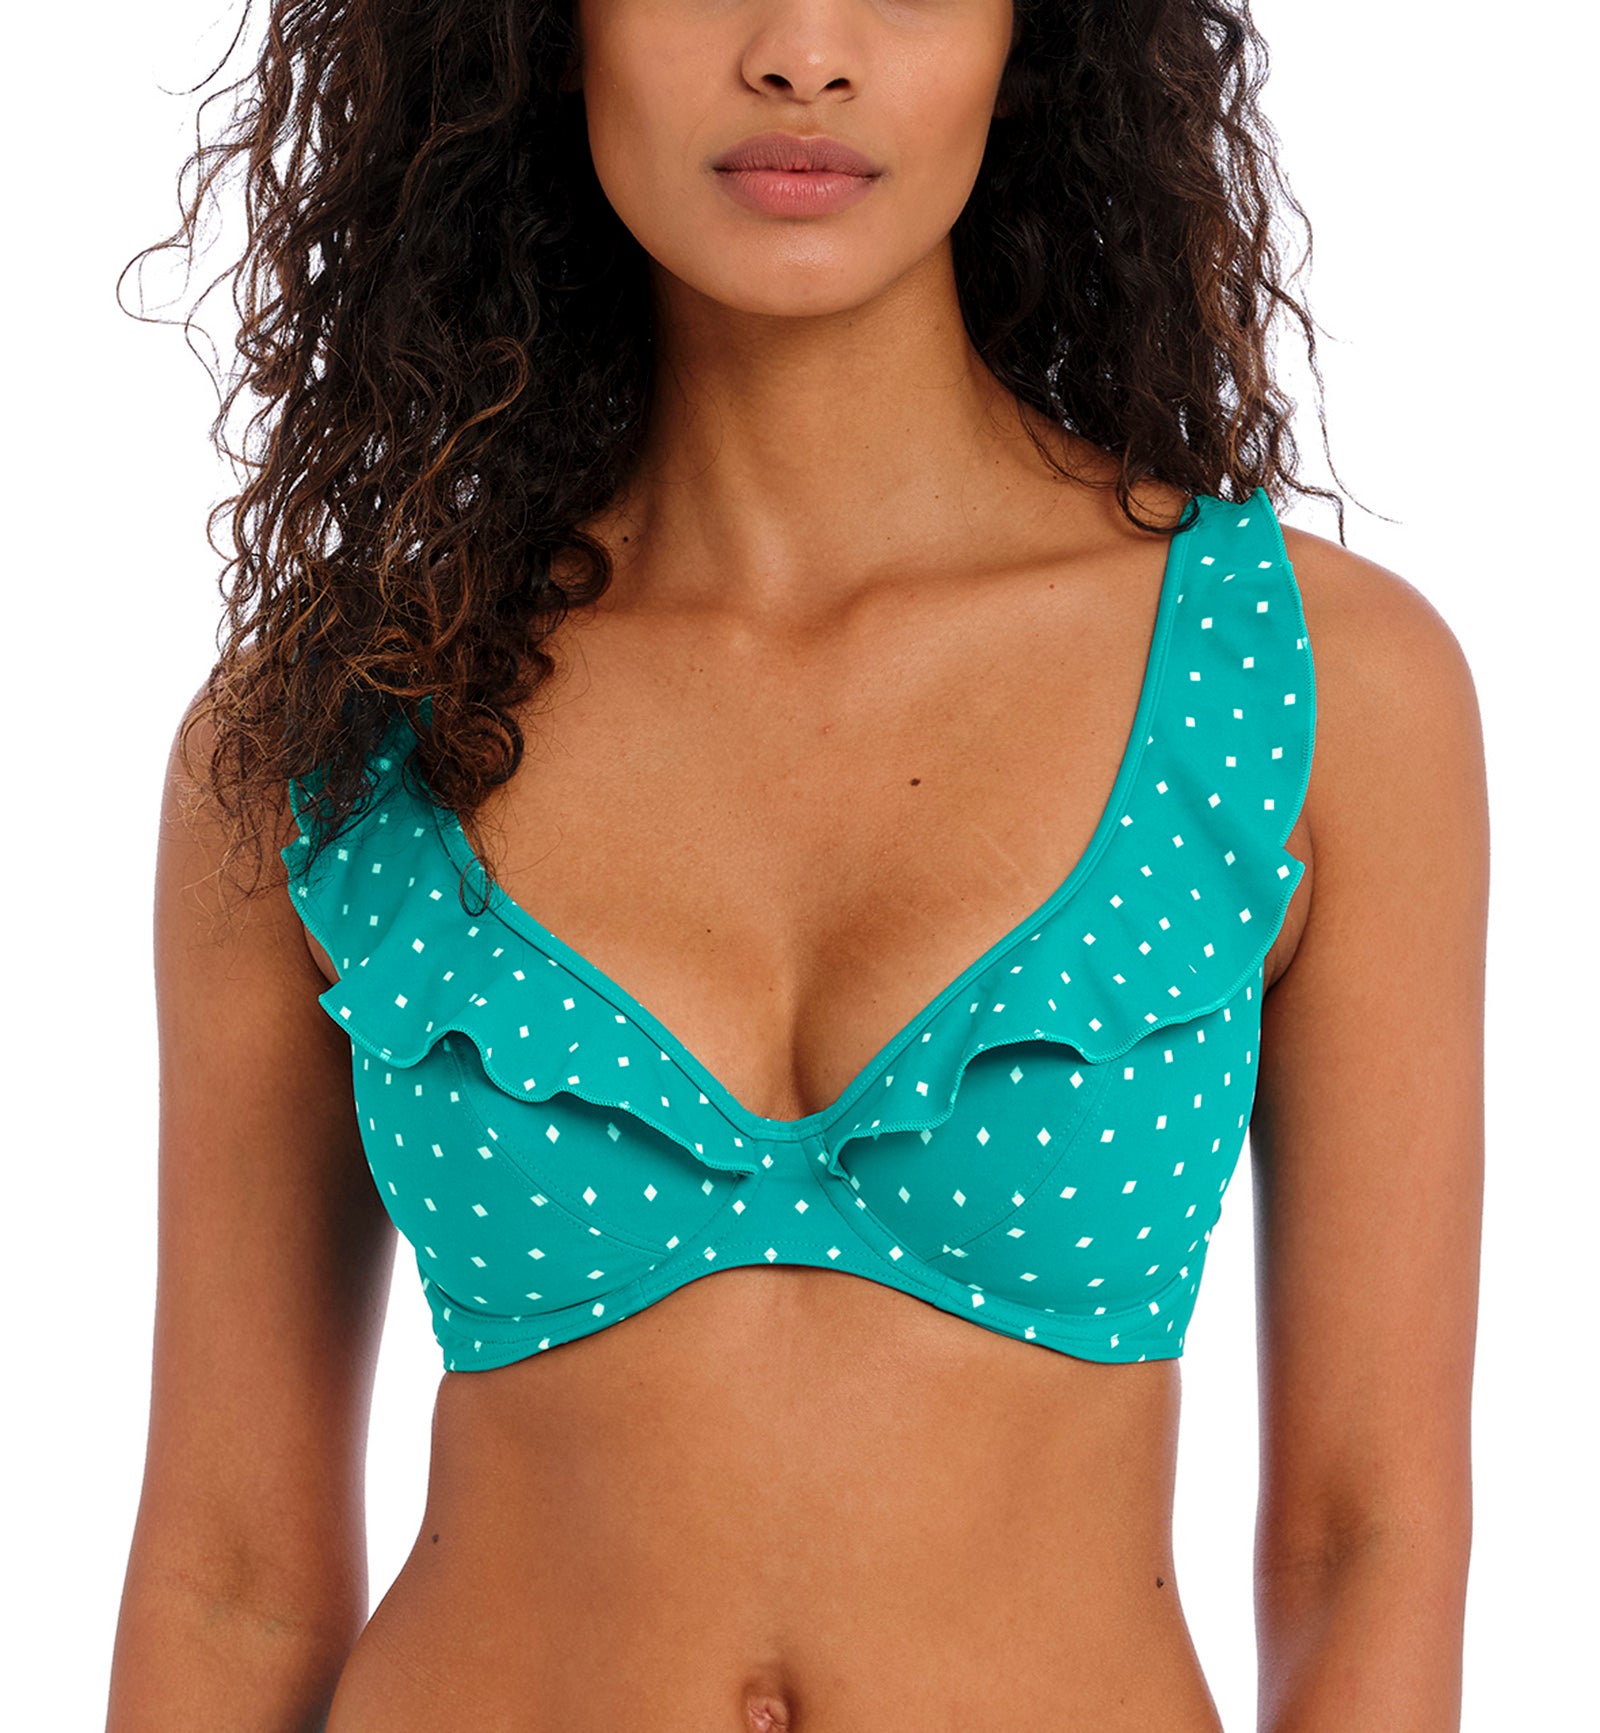 Freya Jewel Cove High Apex Underwire Bikini Top with J Hook (7230),28FF,Marine - Marine,28FF